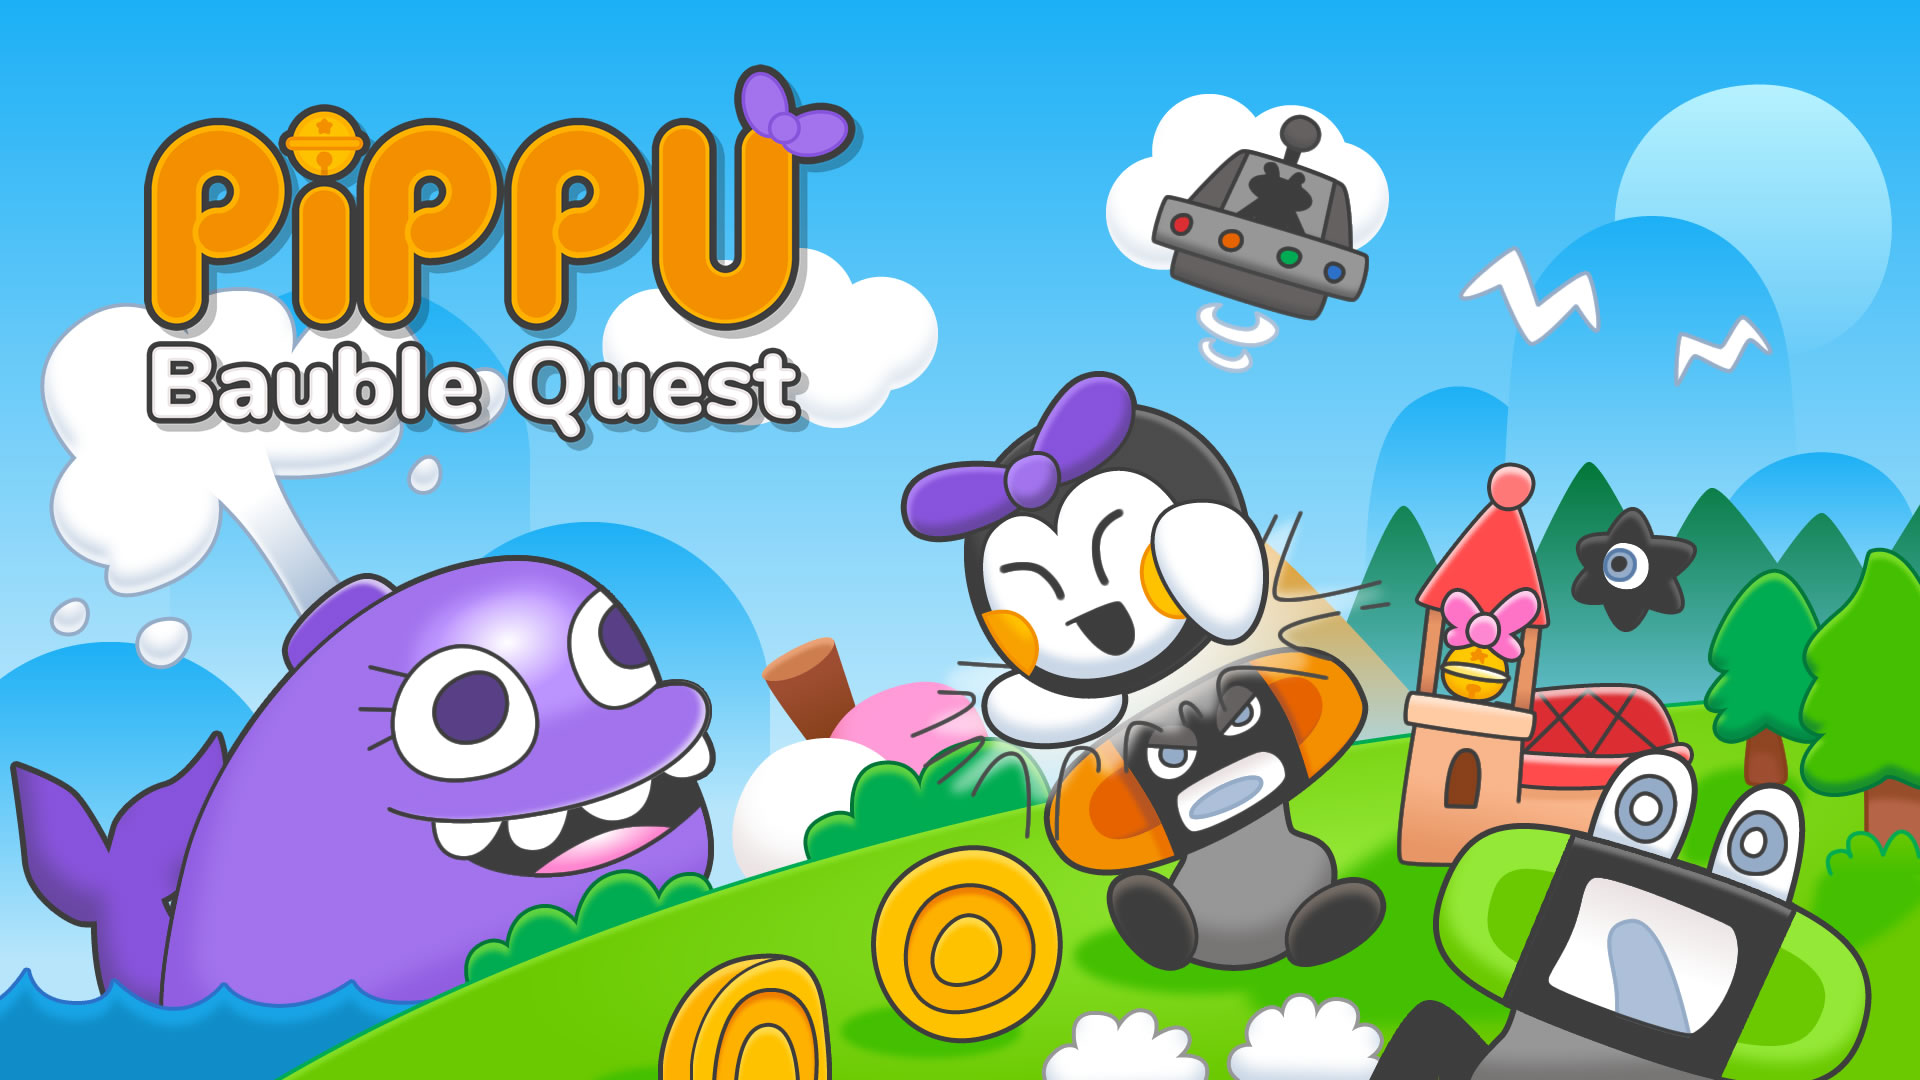 Pippu - Bauble Quest Hero Image